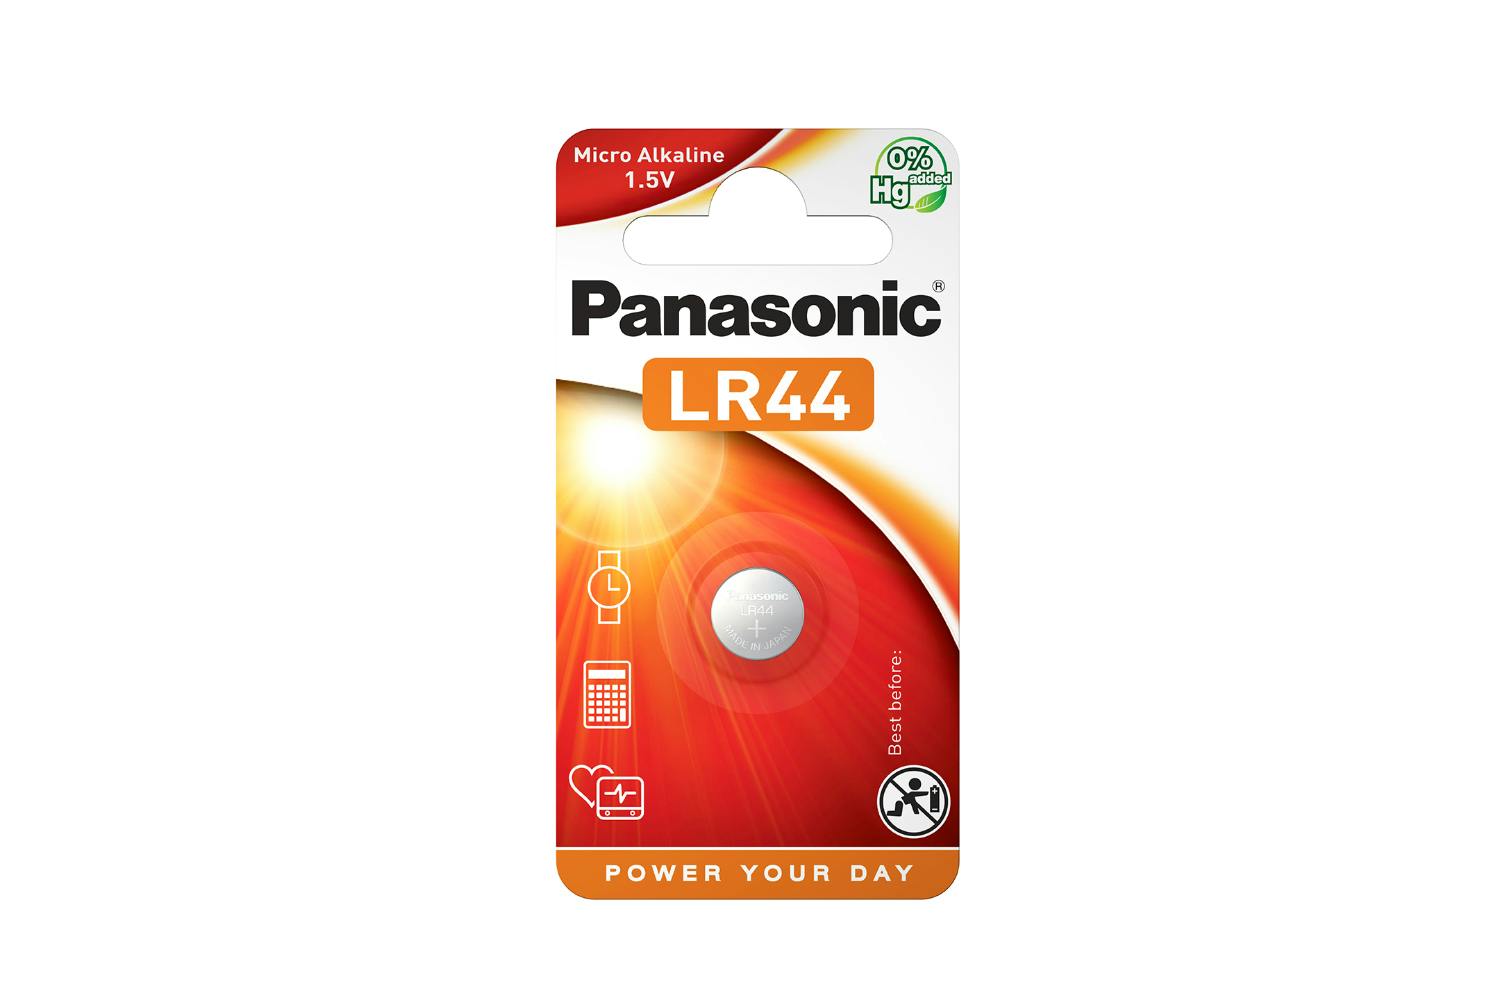 Panasonic Micro Alkaline Coin Cell Battery | LR44